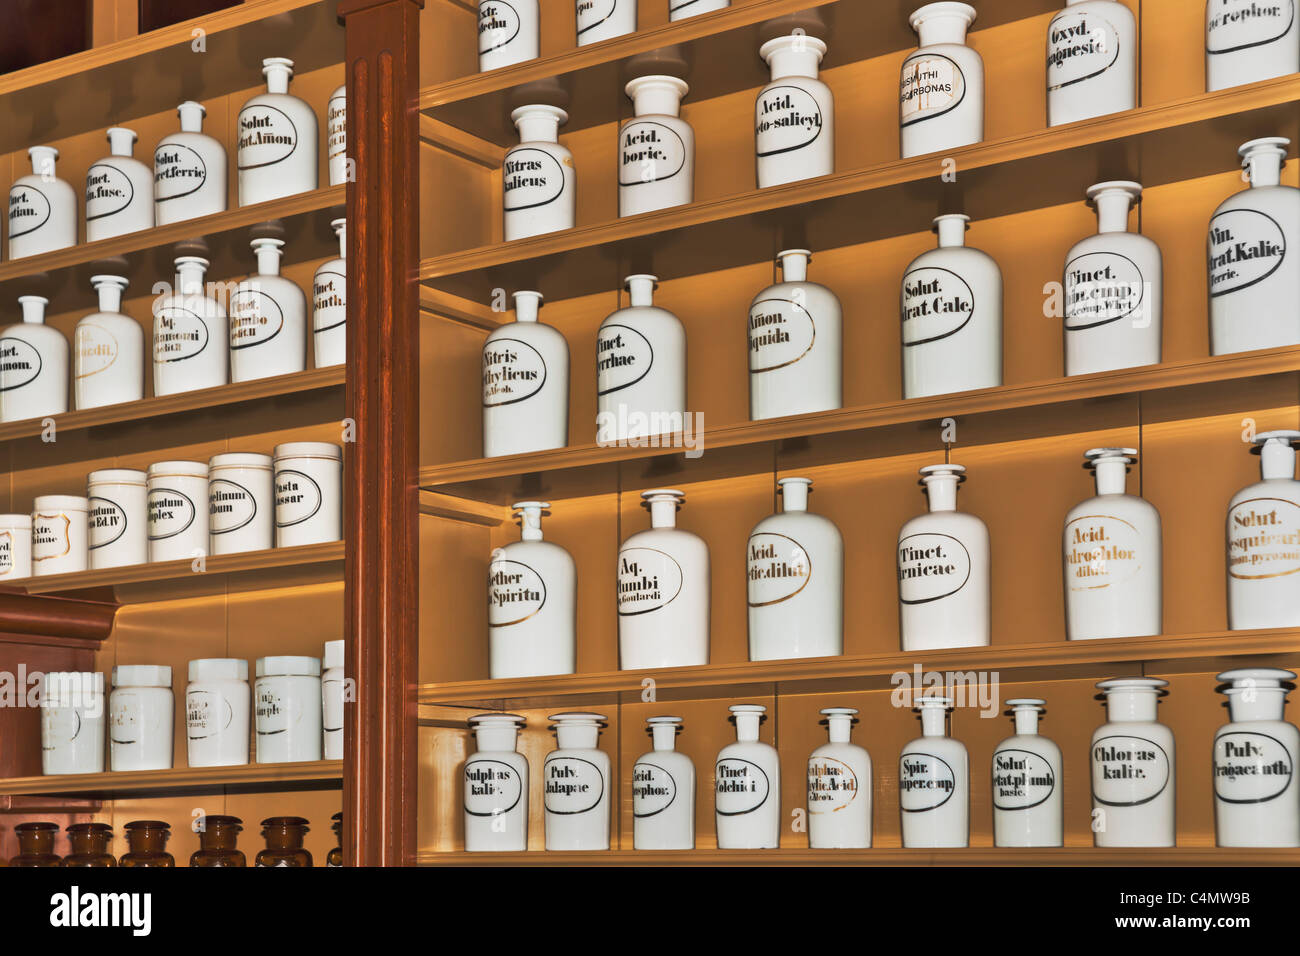 Viele Apothekerflaschen stehen im Regal einer alten Apotheke | Many pharmacists bottles on the shelf of an old pharmacy Stock Photo